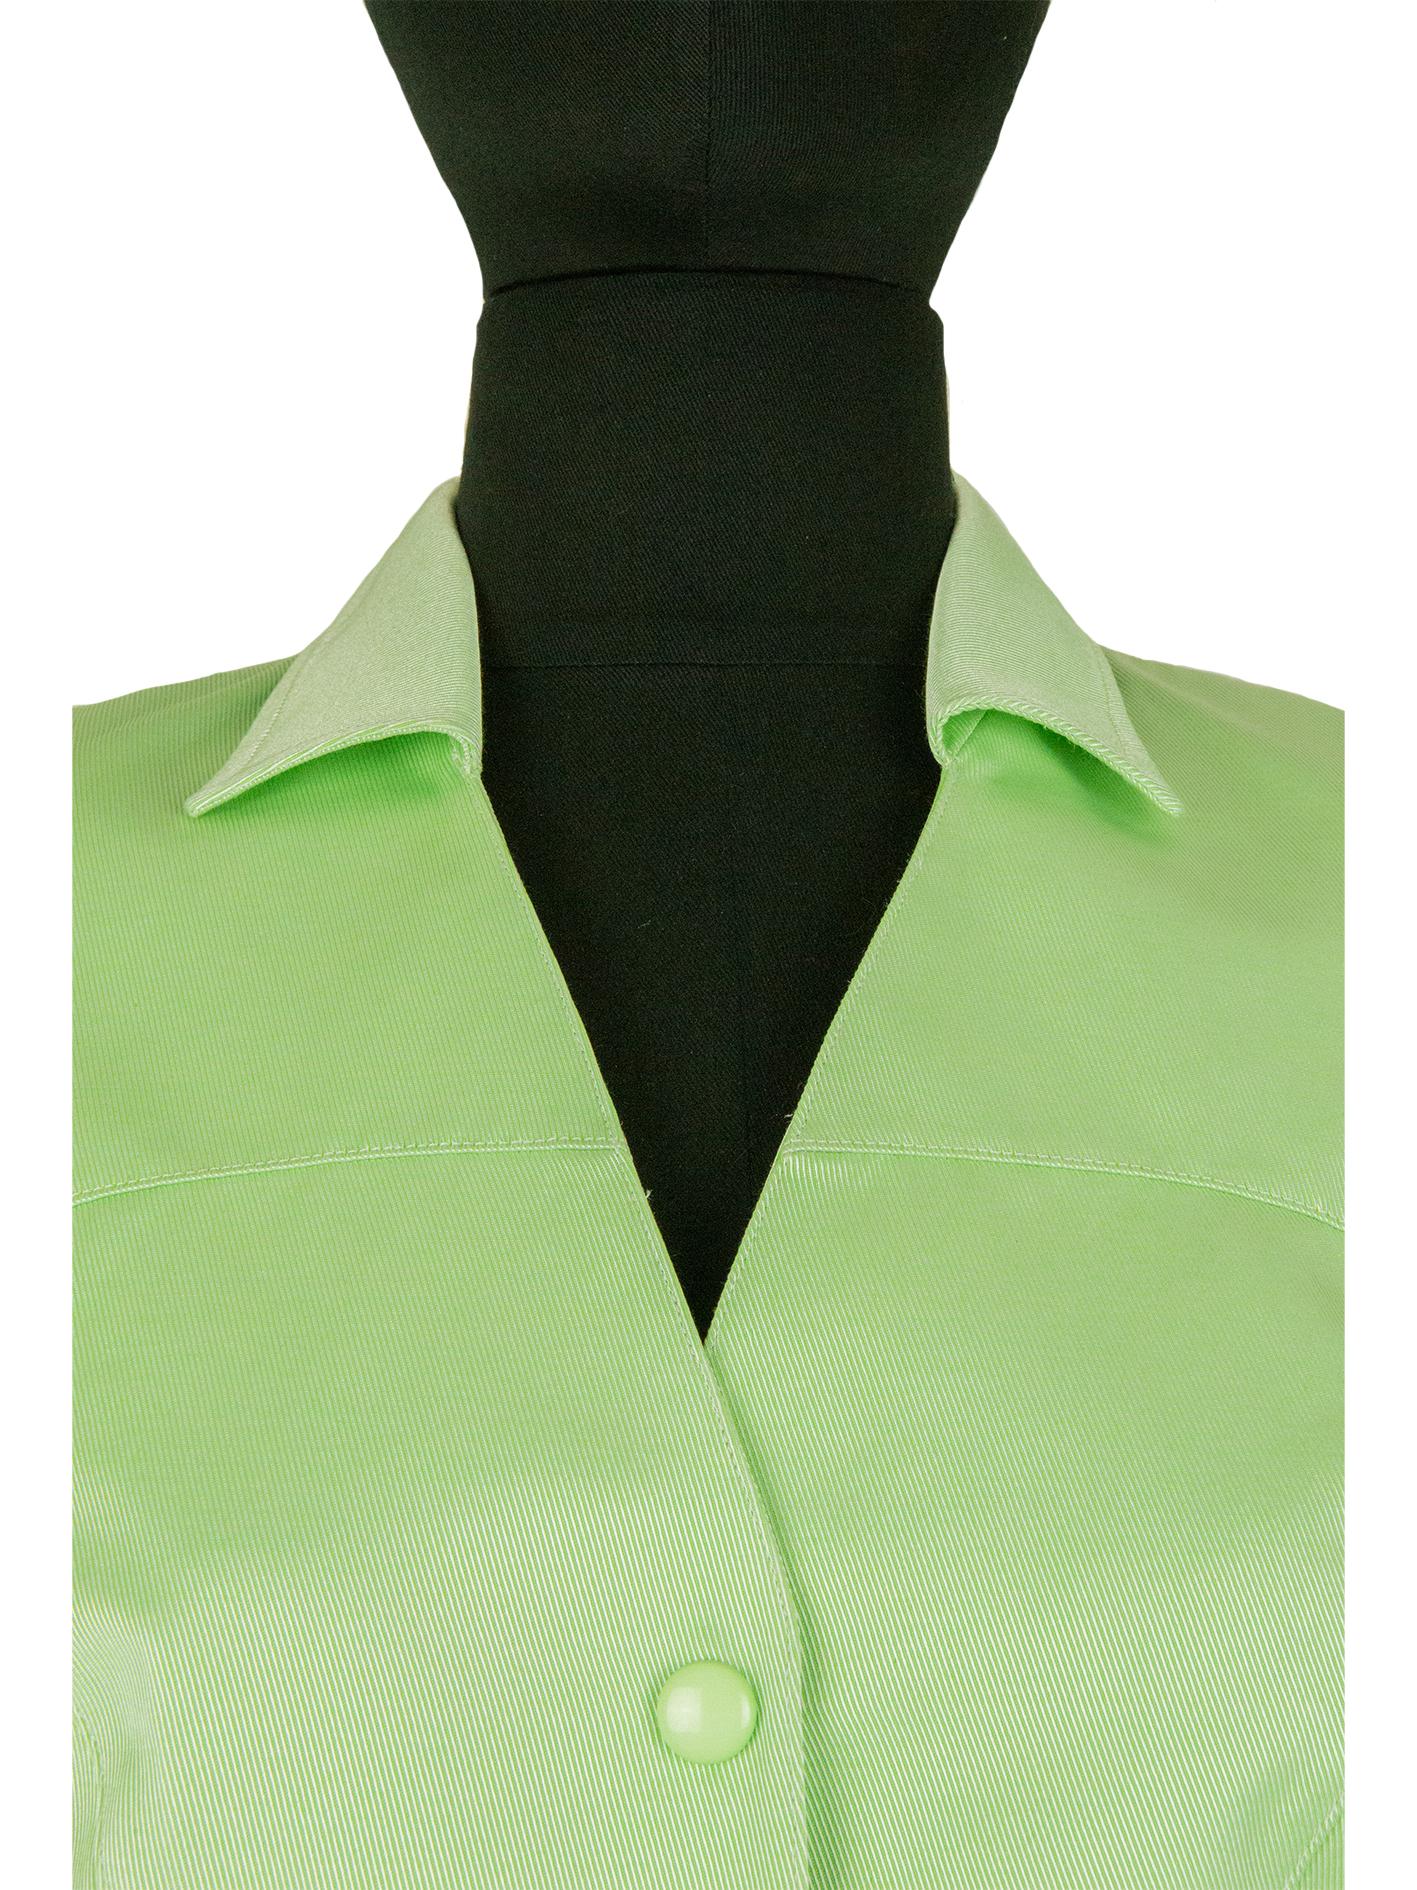 1990s Thierry Mugler Tea Green Jacket 1